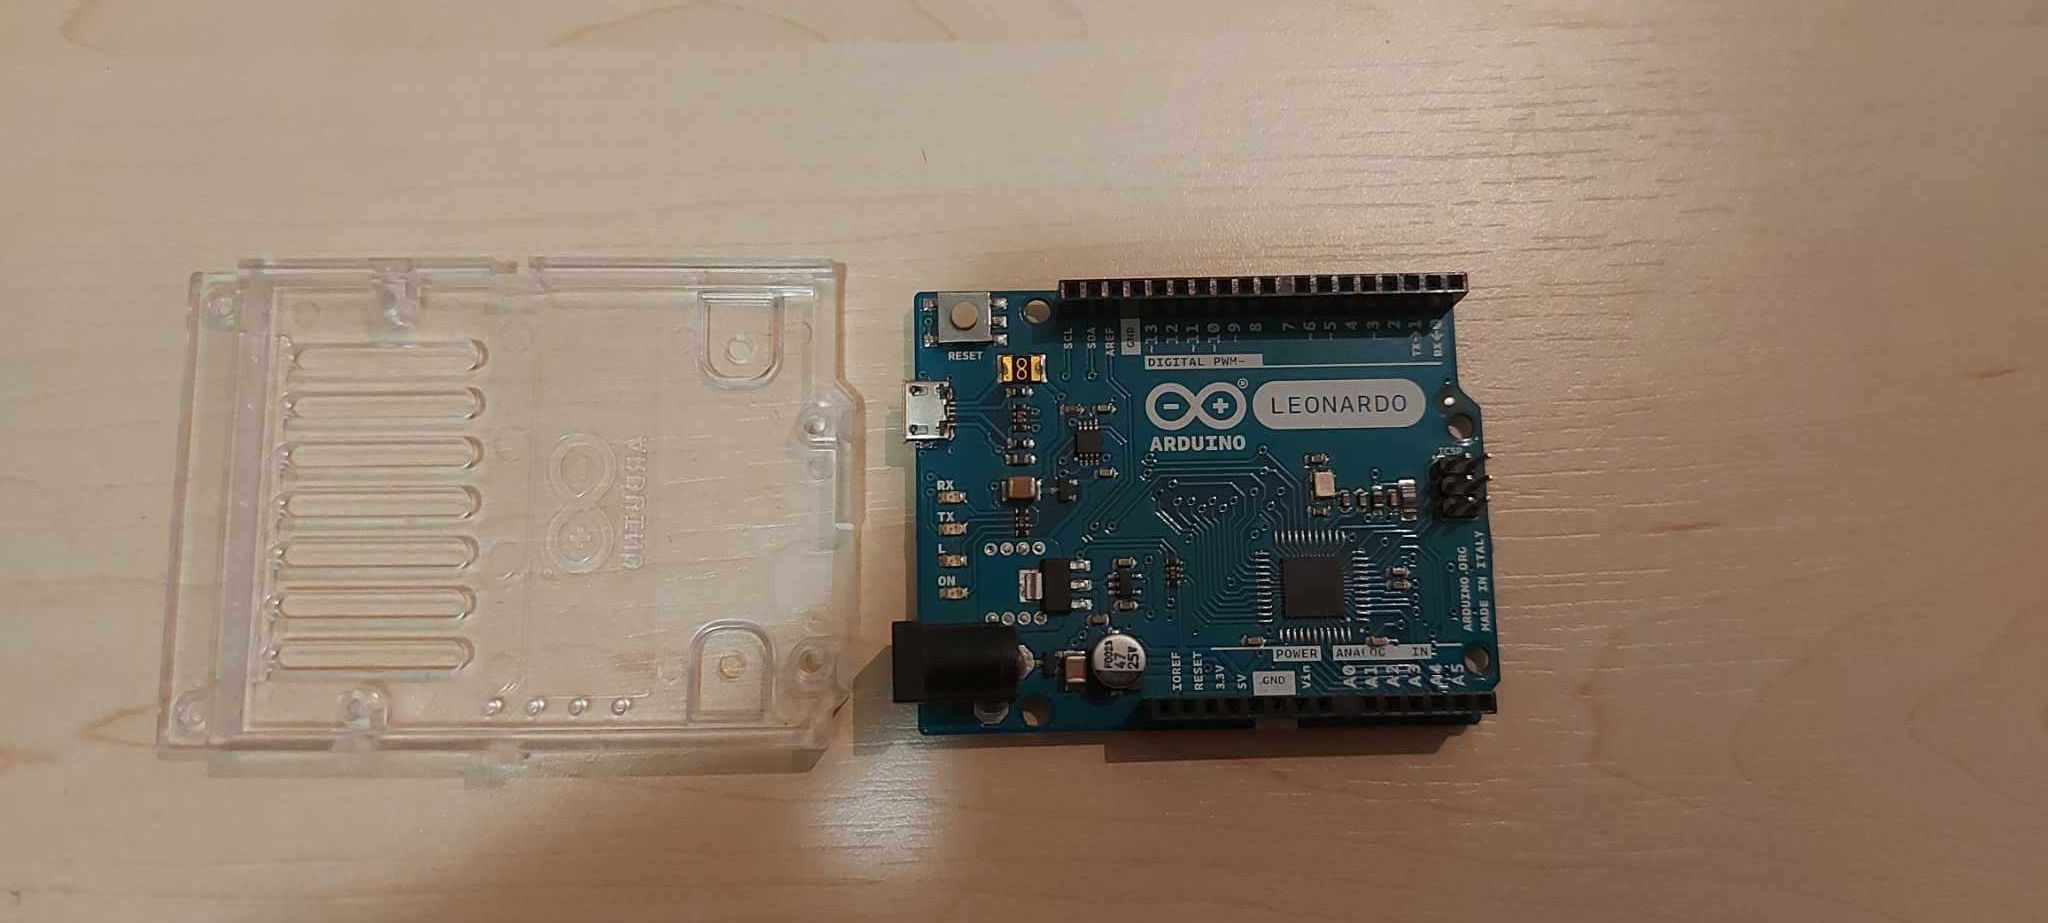 Arduino Leonardo R3 mikrokontroler nowy